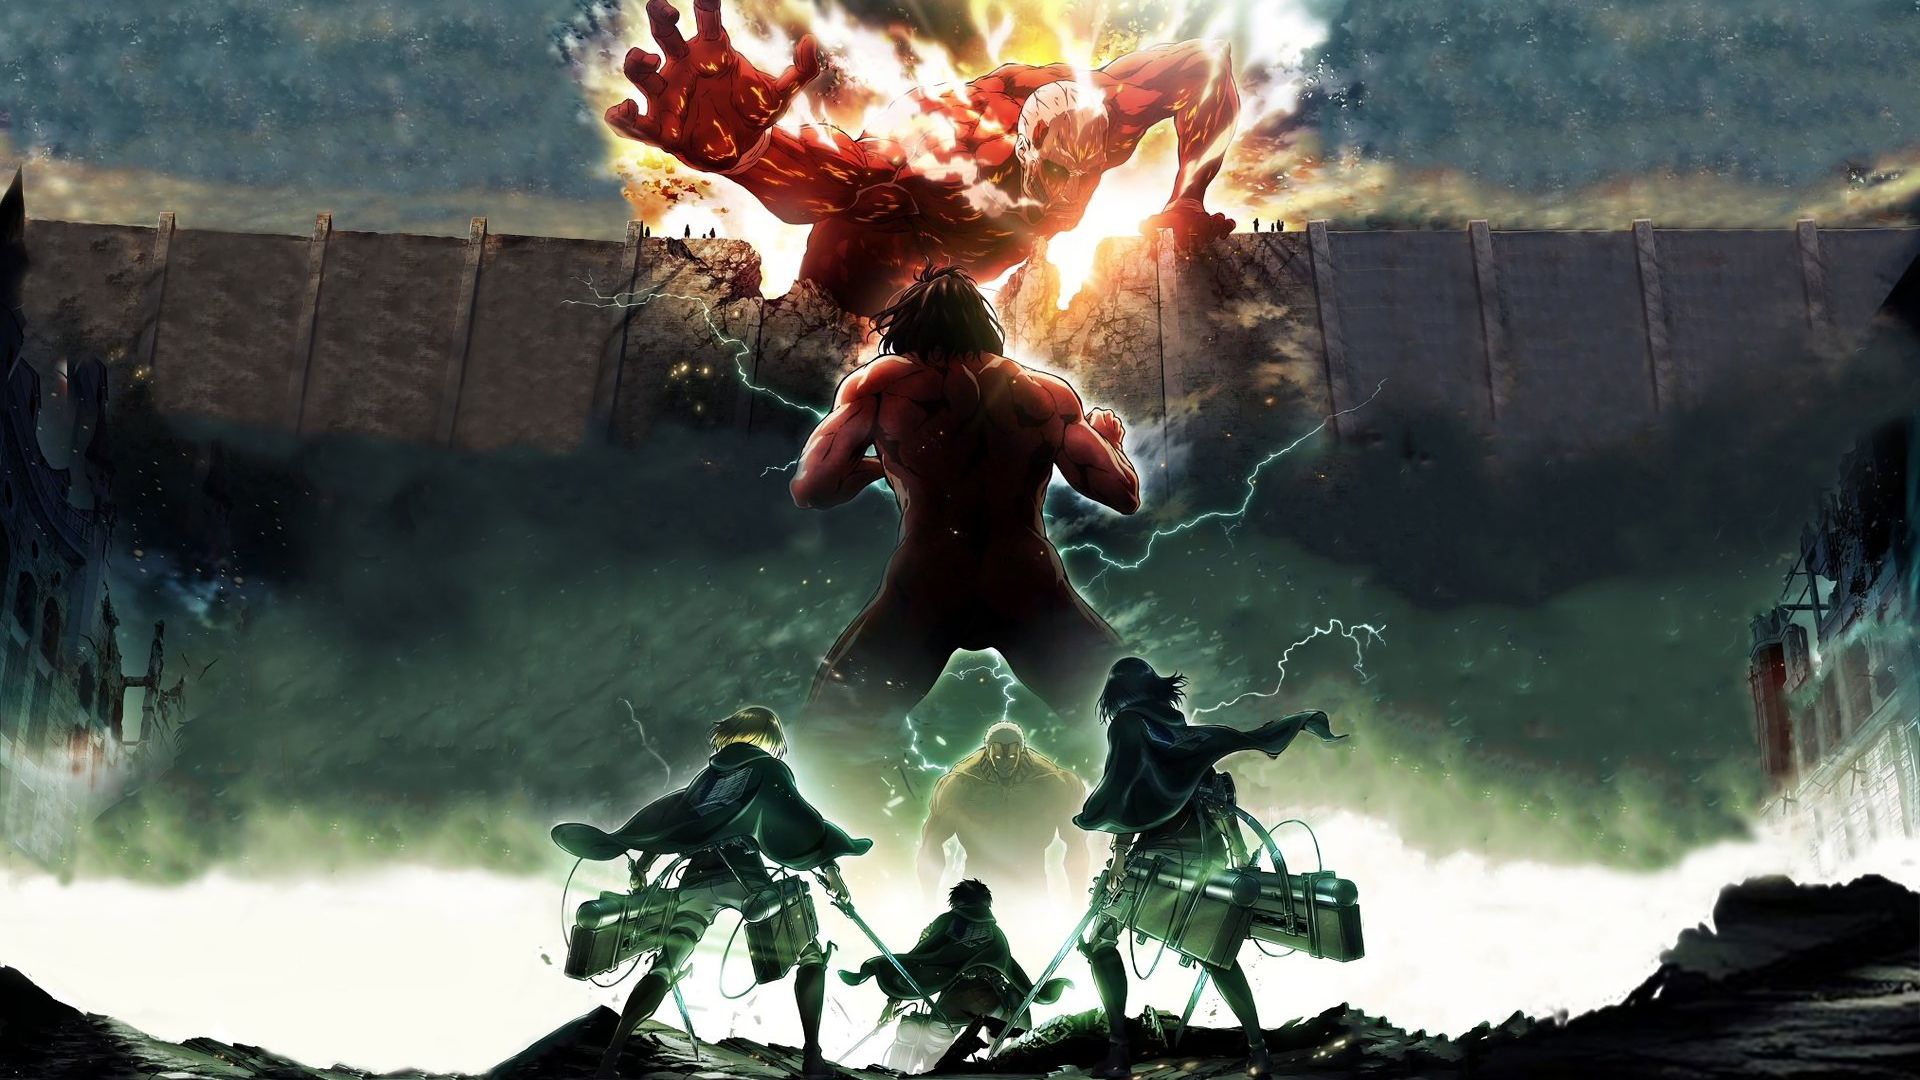 Desktop Wallpaper Attack On Titan, Anime, Fight, Hd Image, Picture,  Background, 70f4c6